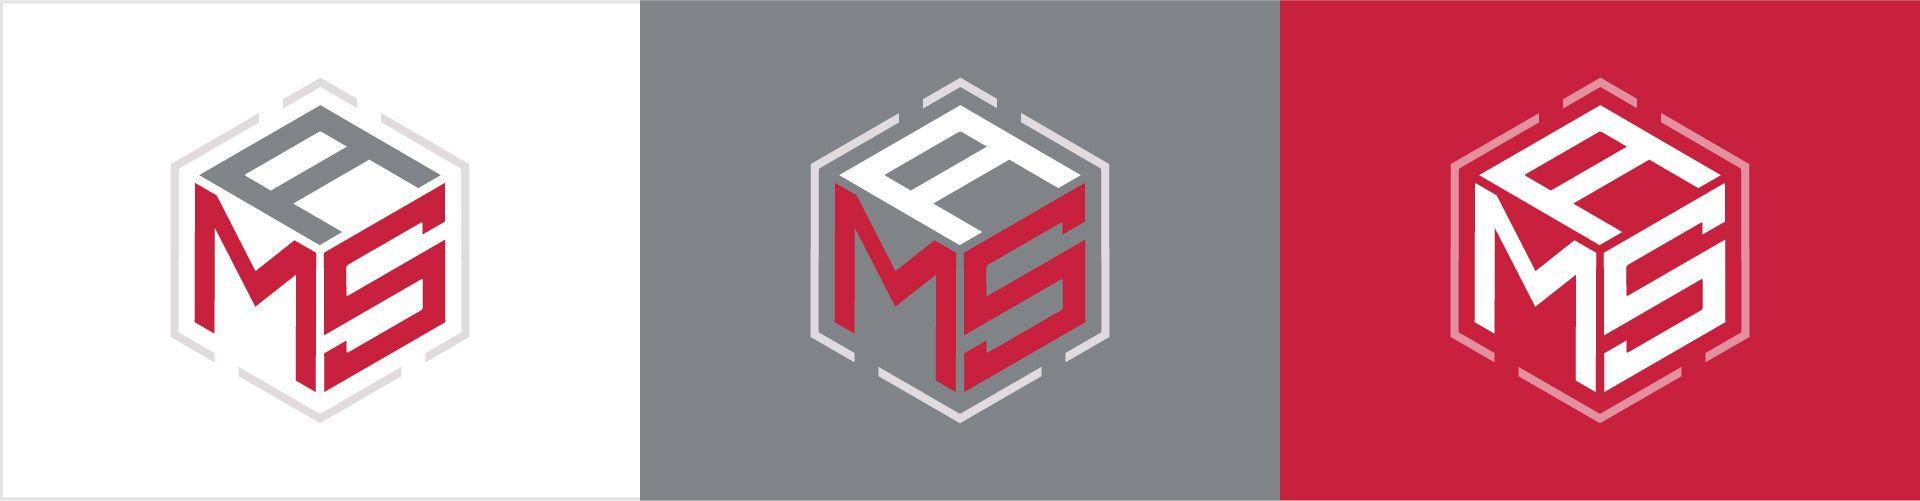 MSA Logo - Danimal Design -- Dan Allan - MSA Logo Design